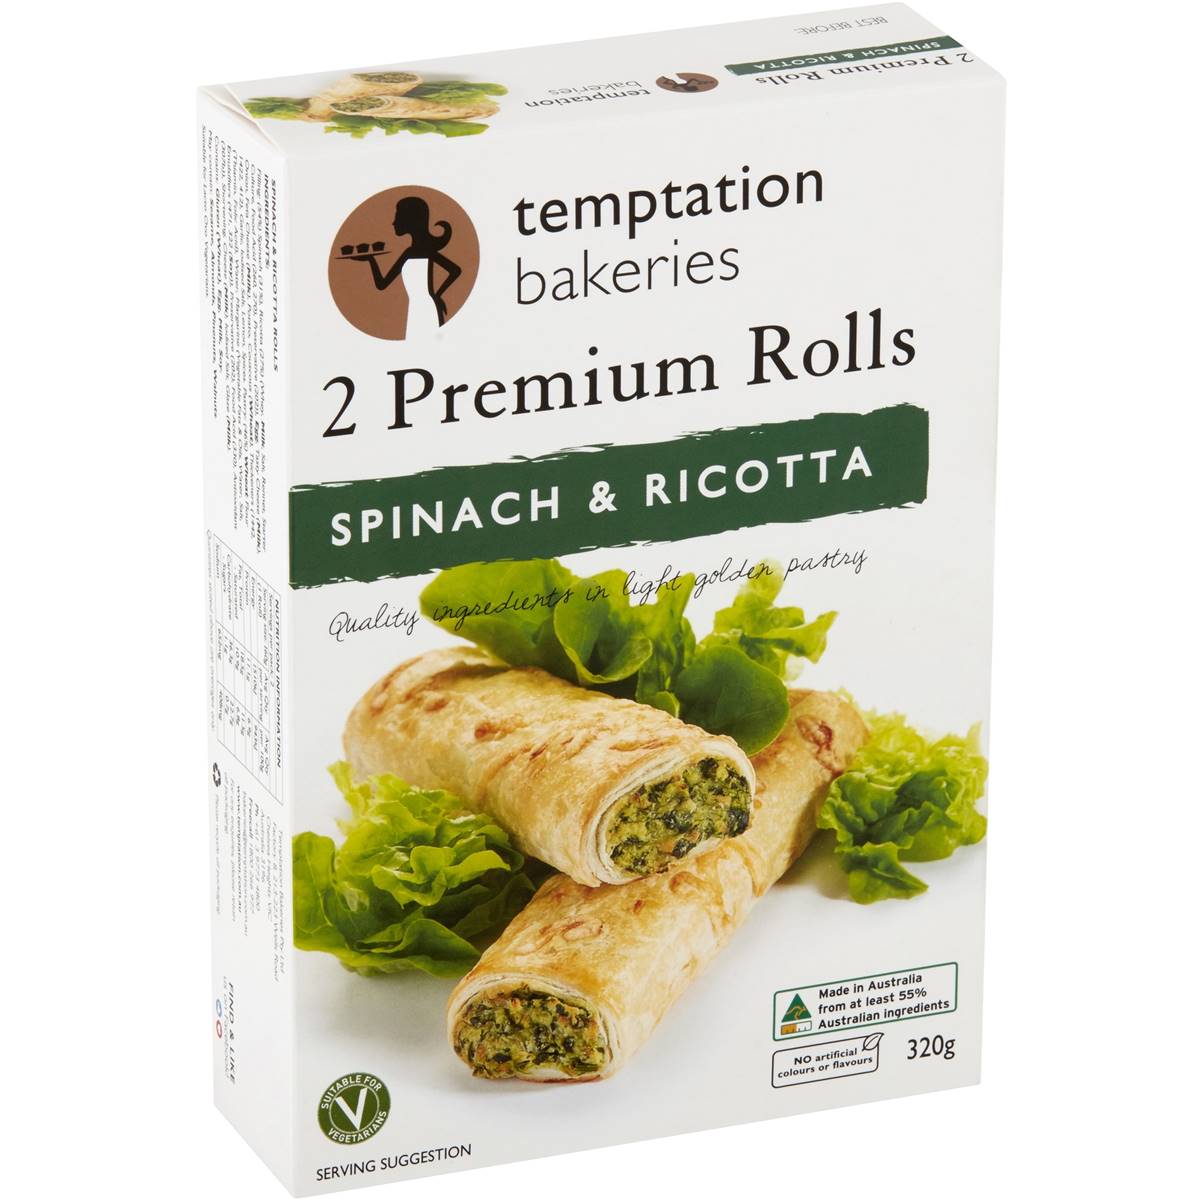 Calories in Temptation Bakeries Premium Spinach & Ricotta Rolls